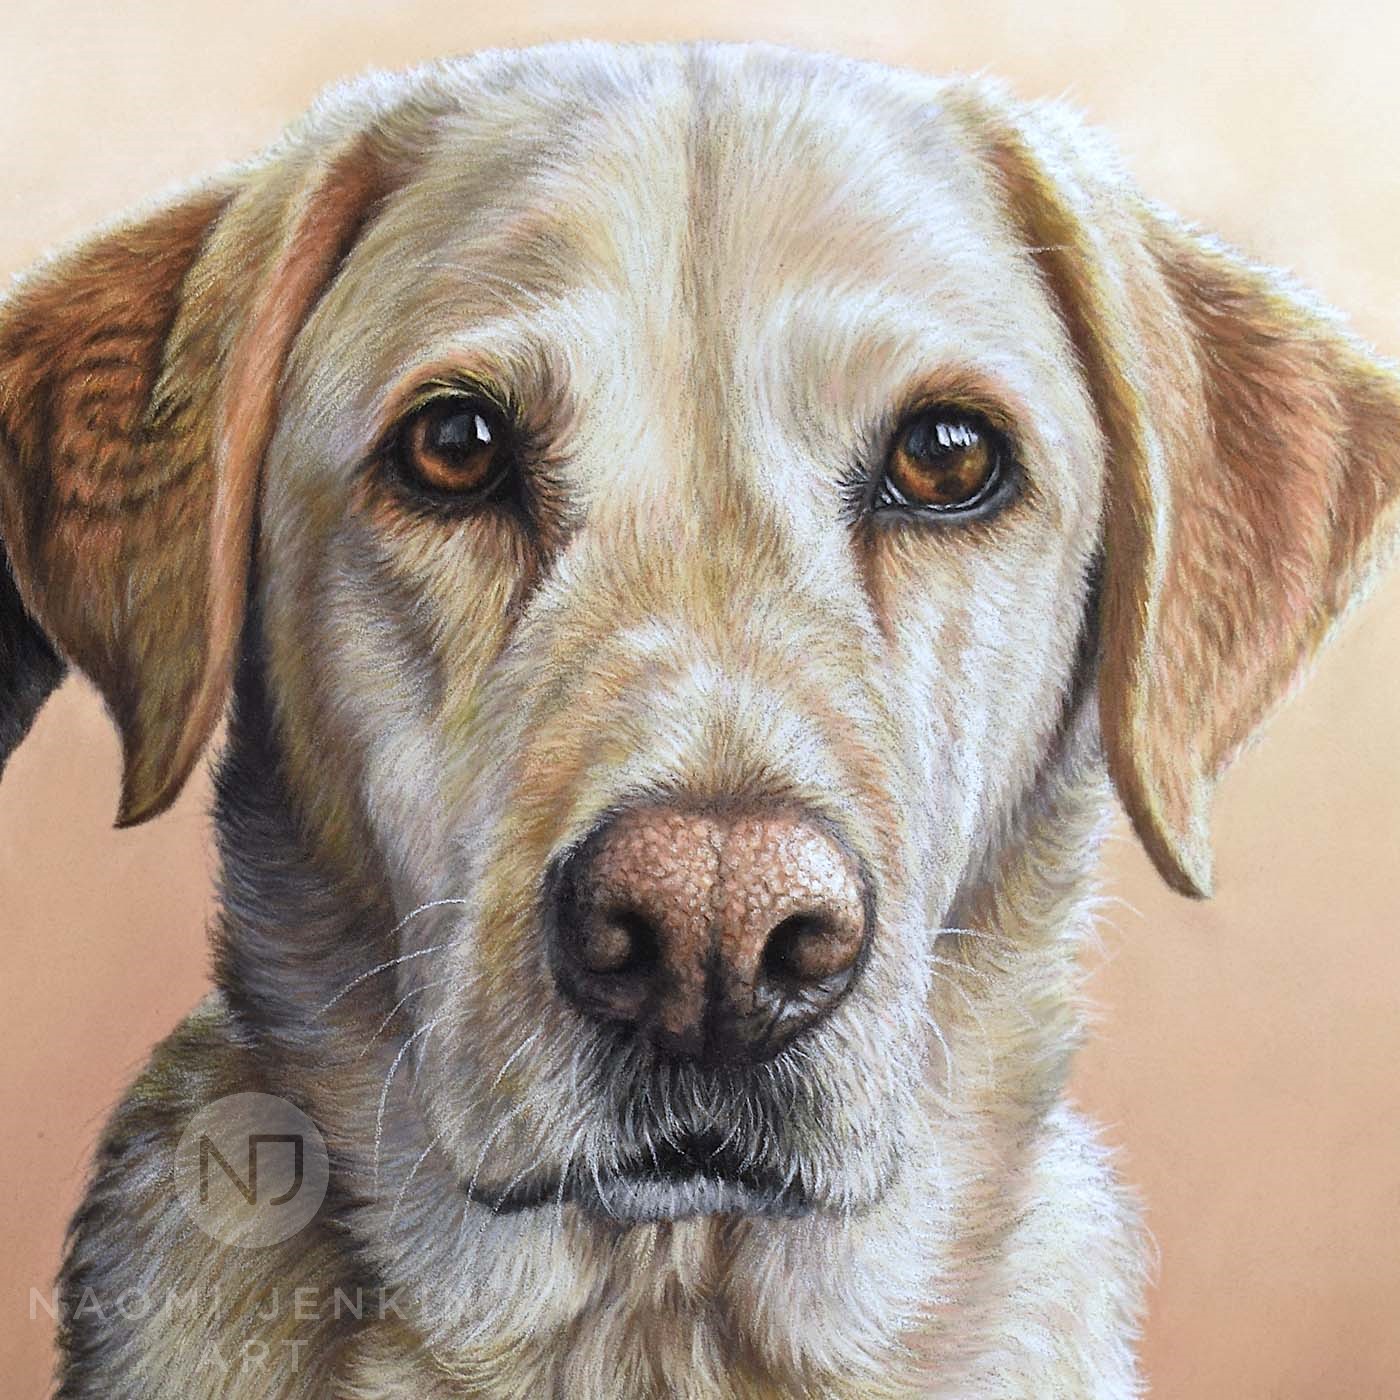 Portrait of yellow Labrador by Naomi Jenkin Art